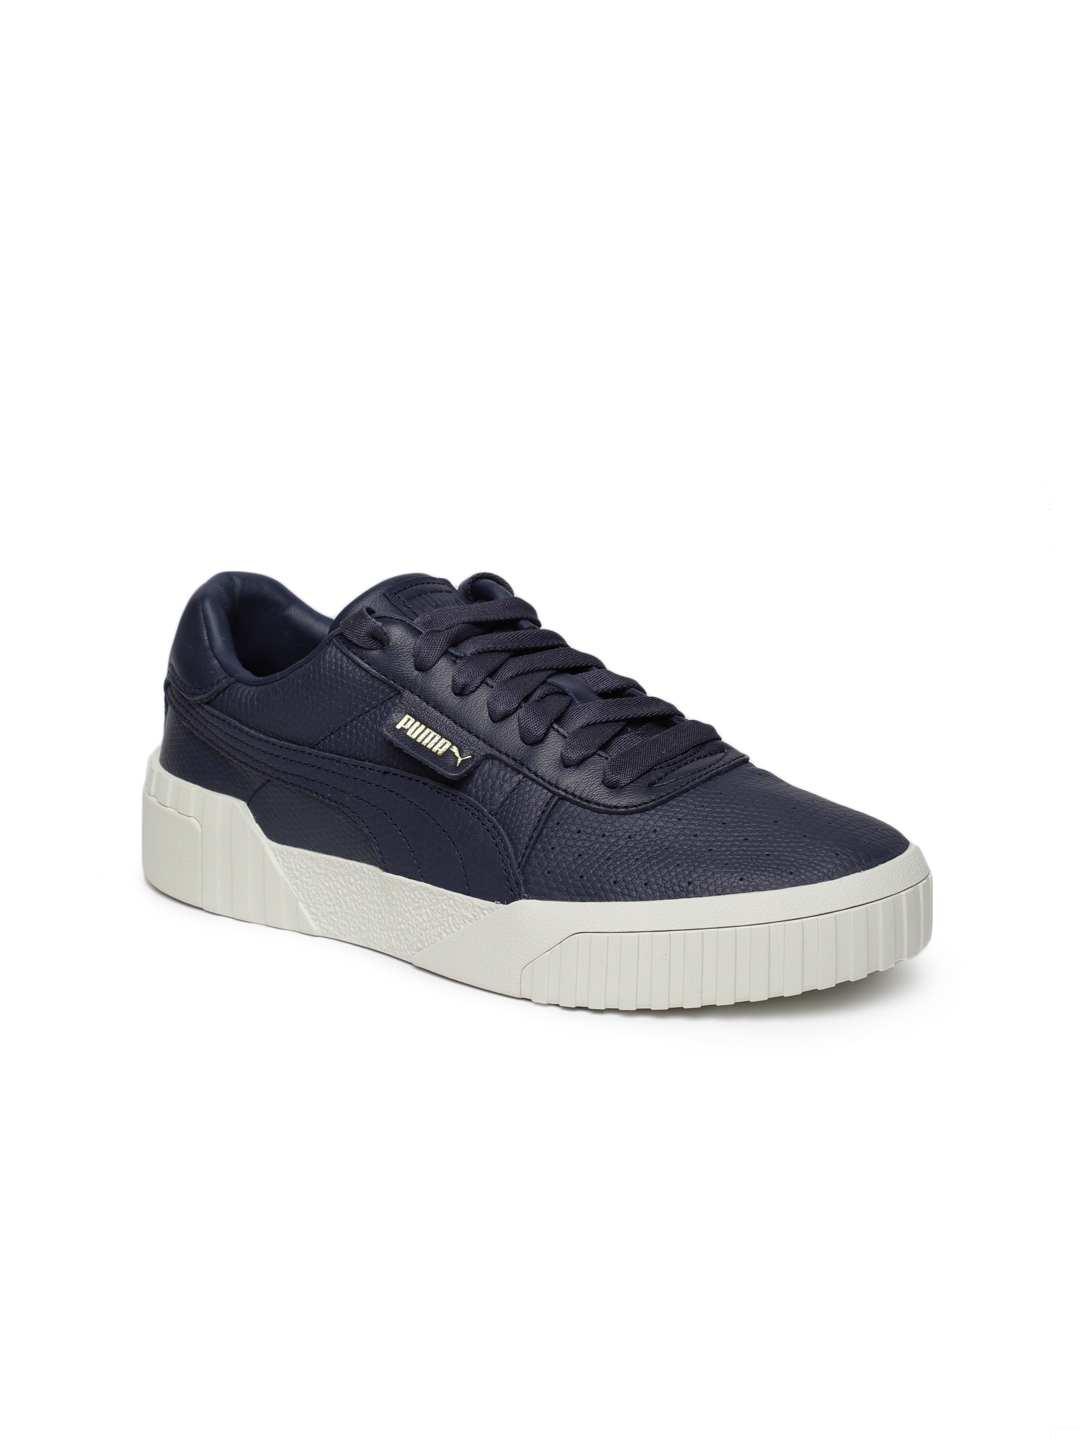 Buy Puma Women Navy Blue Cali Emboss Leather Sneakers - Casual for Women 8477779 | Myntra